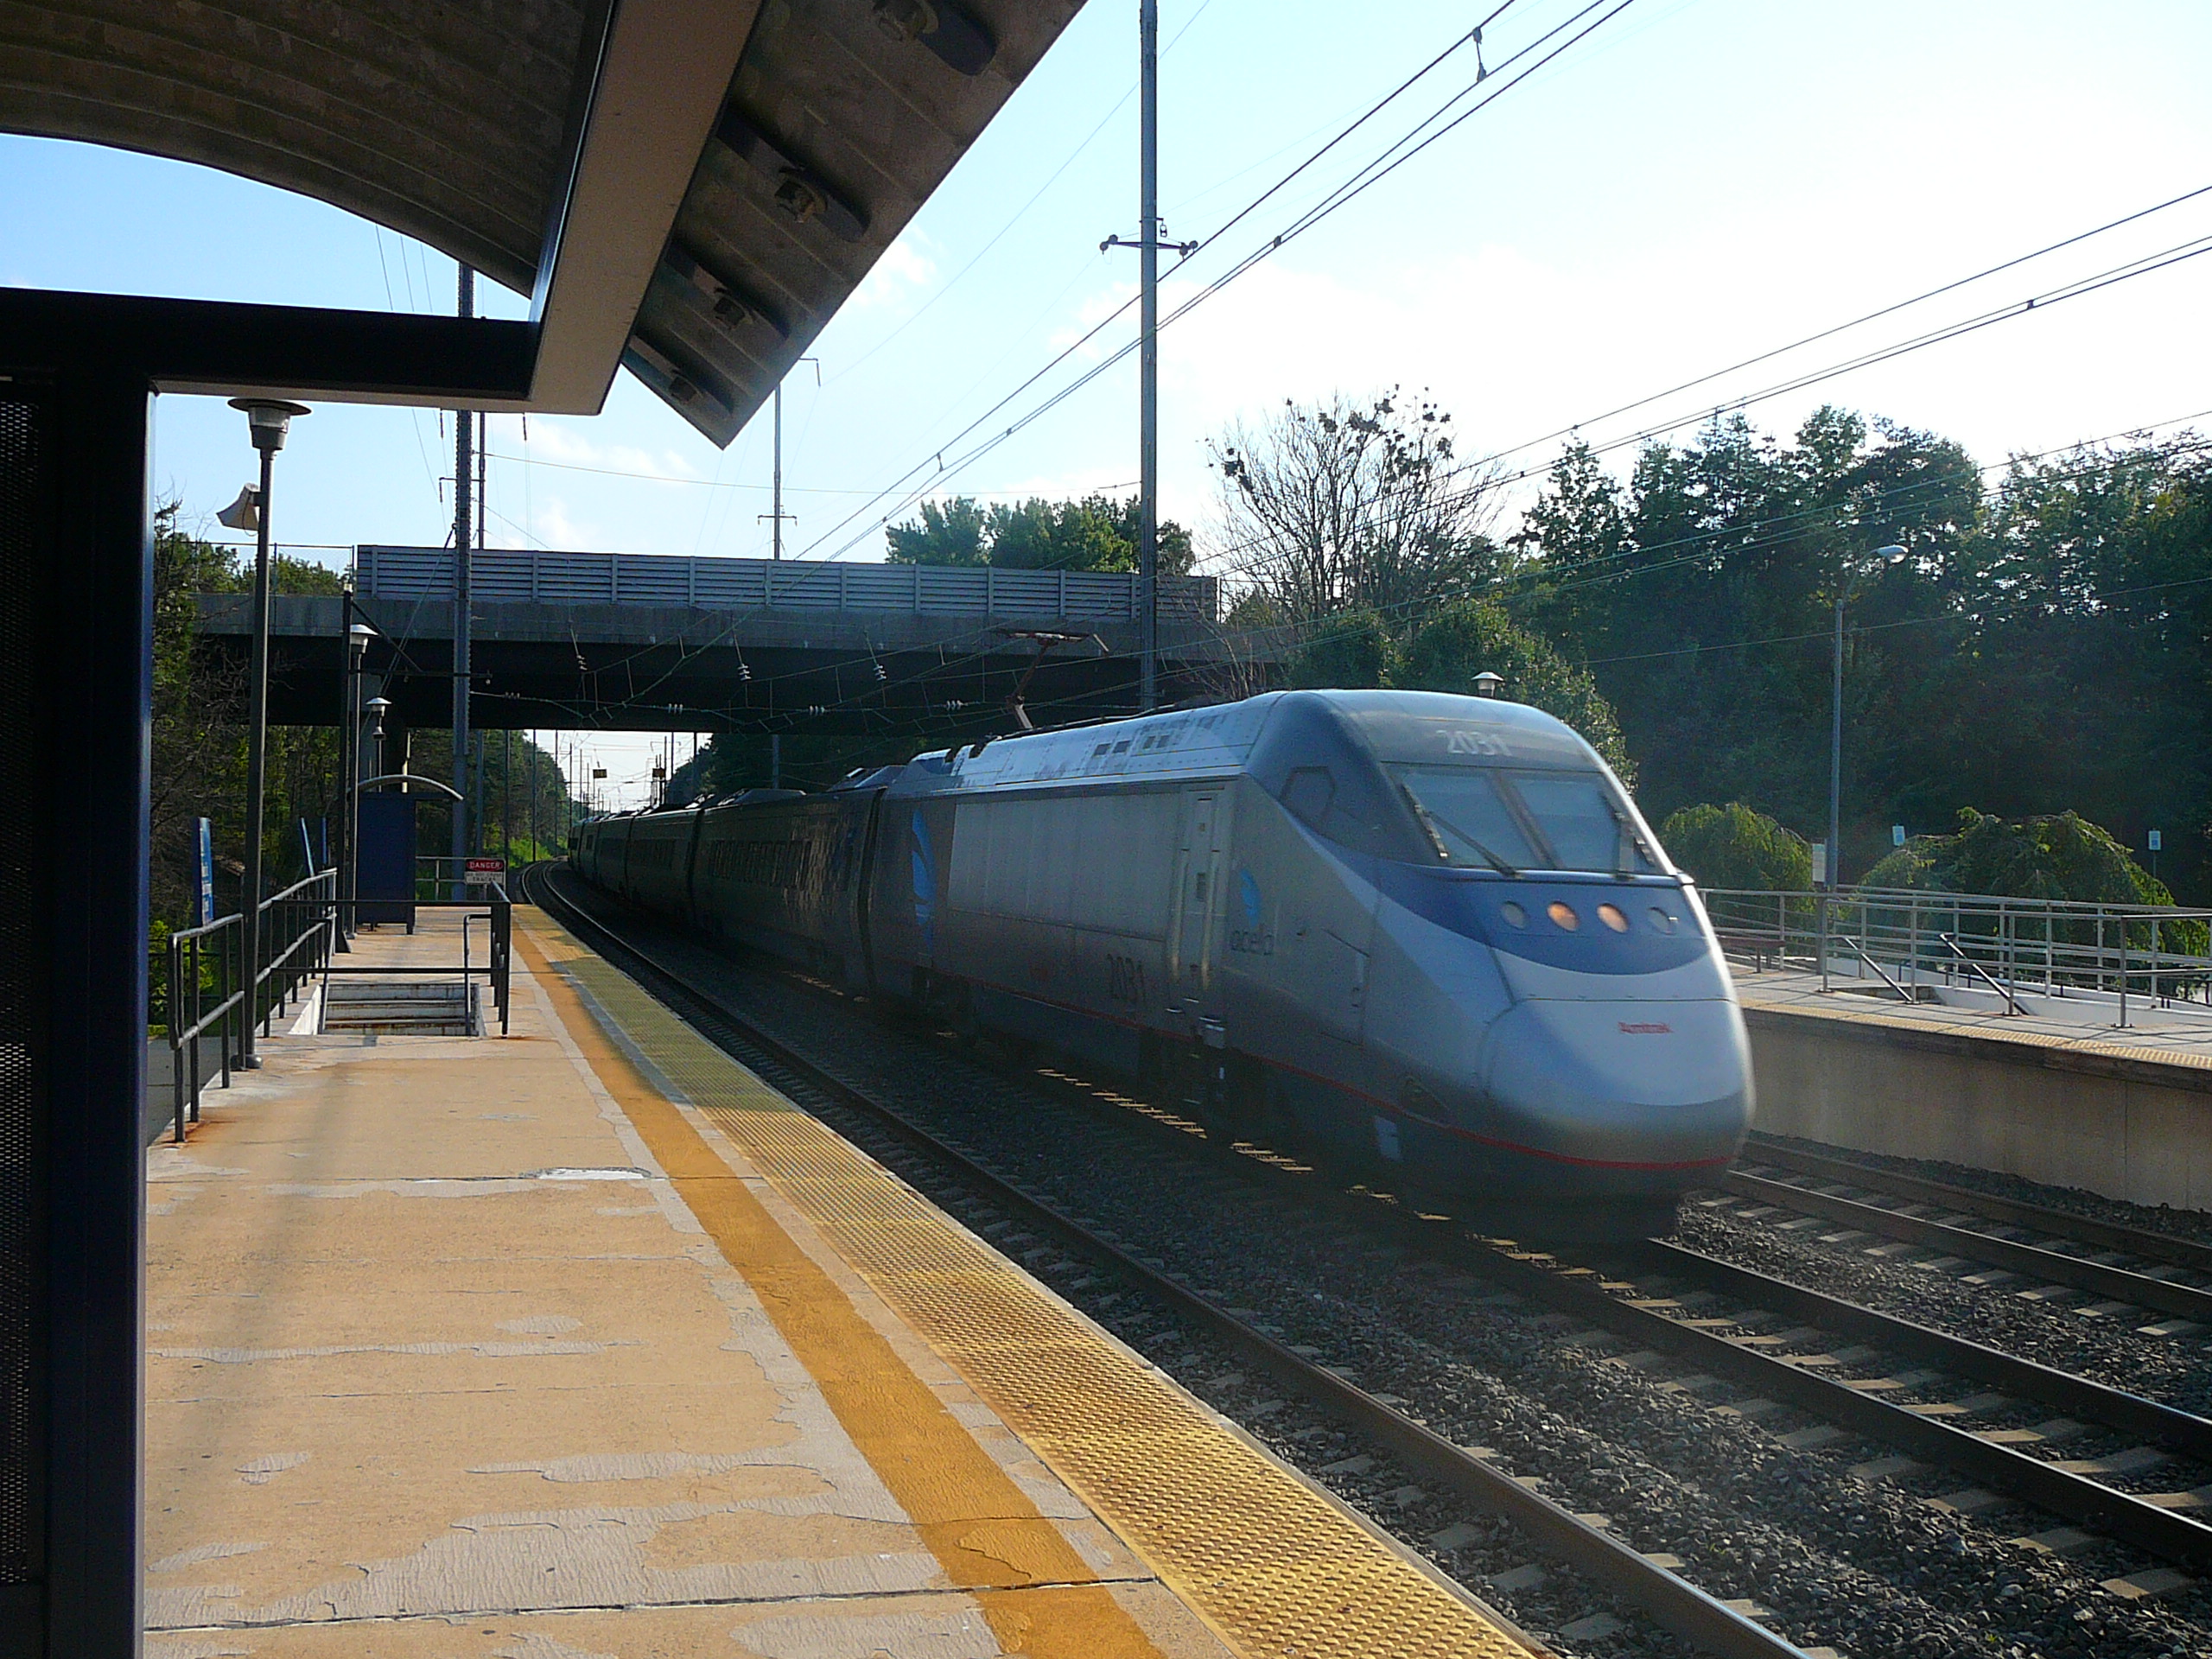 Amtrak Express local to the Washington DC area.